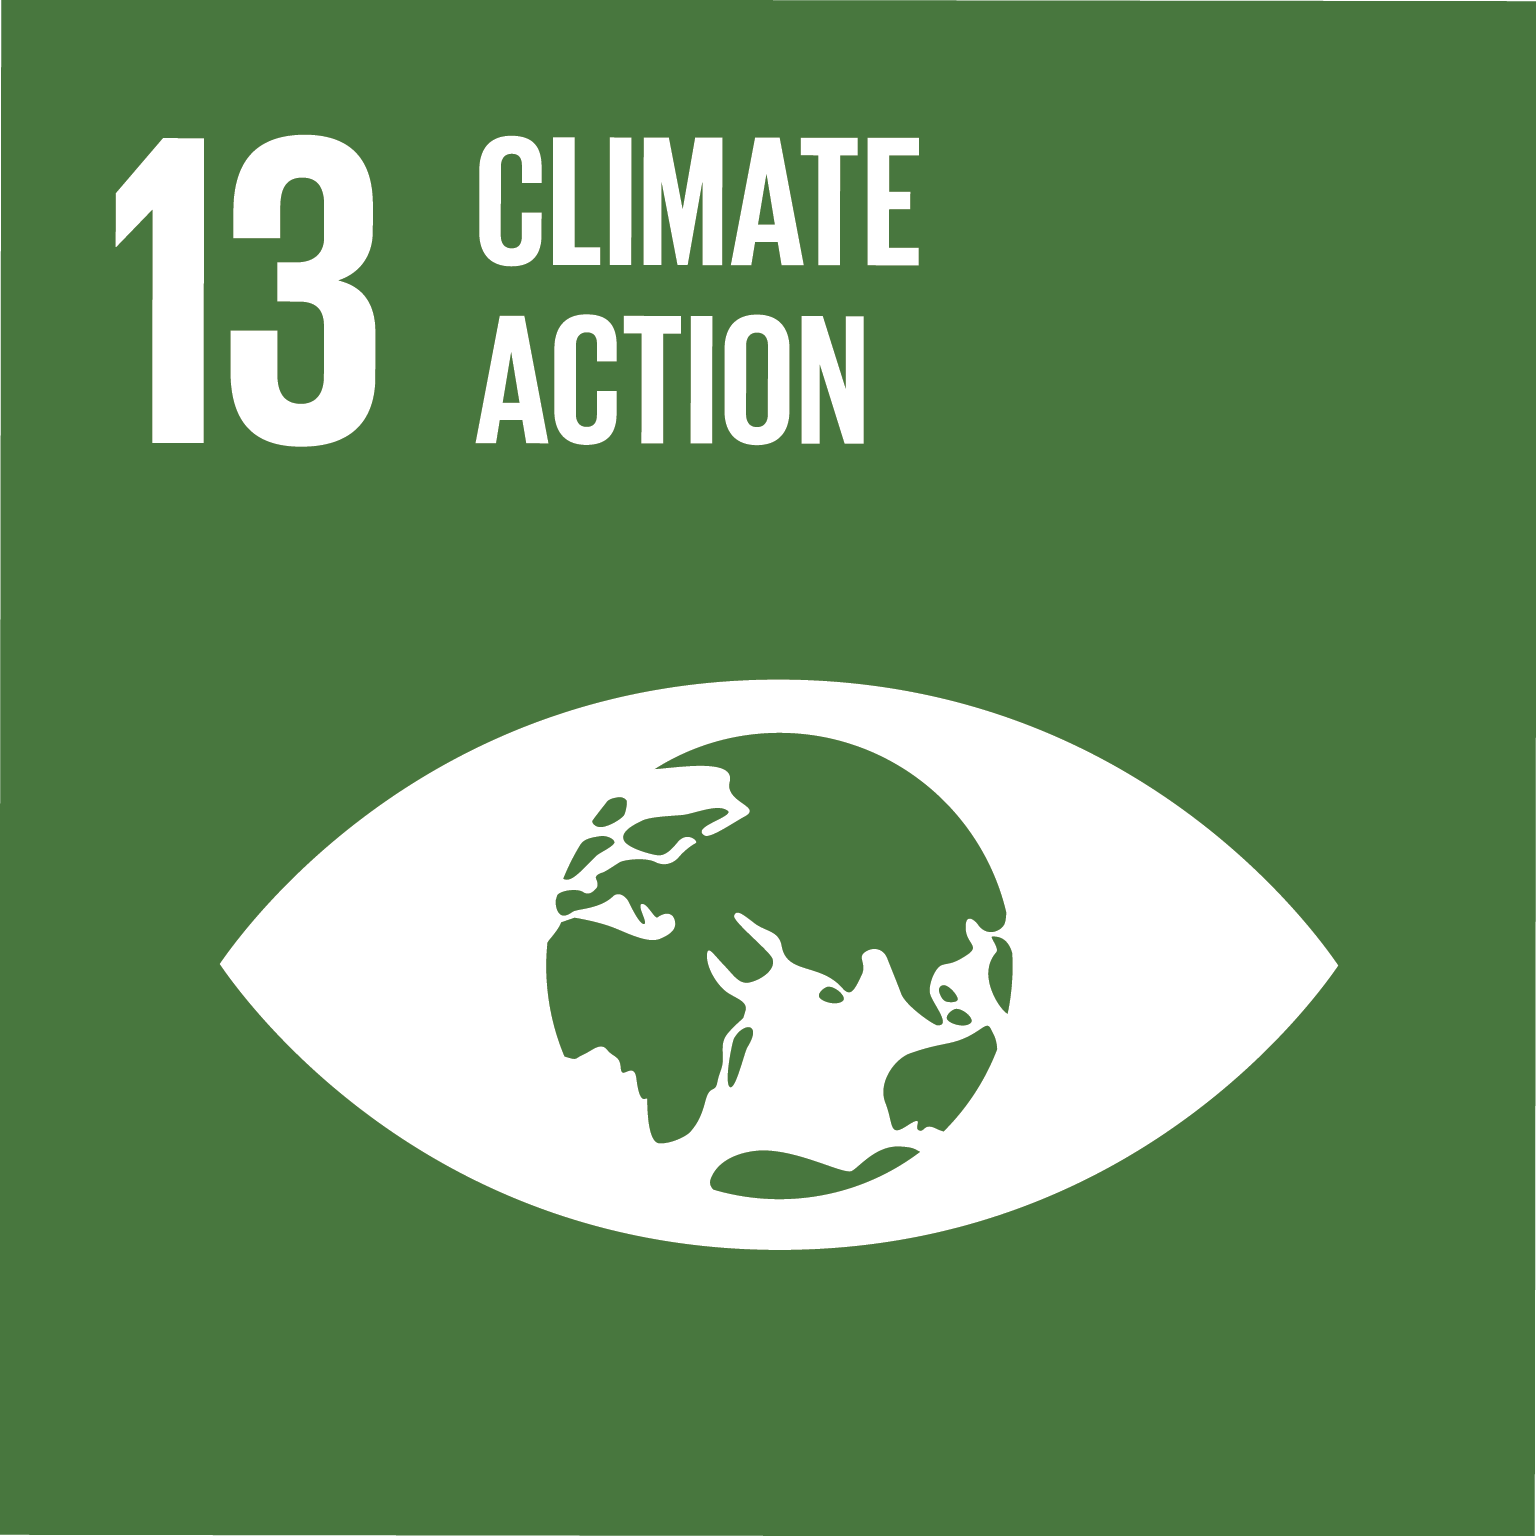 Sustainable Development Goals 13